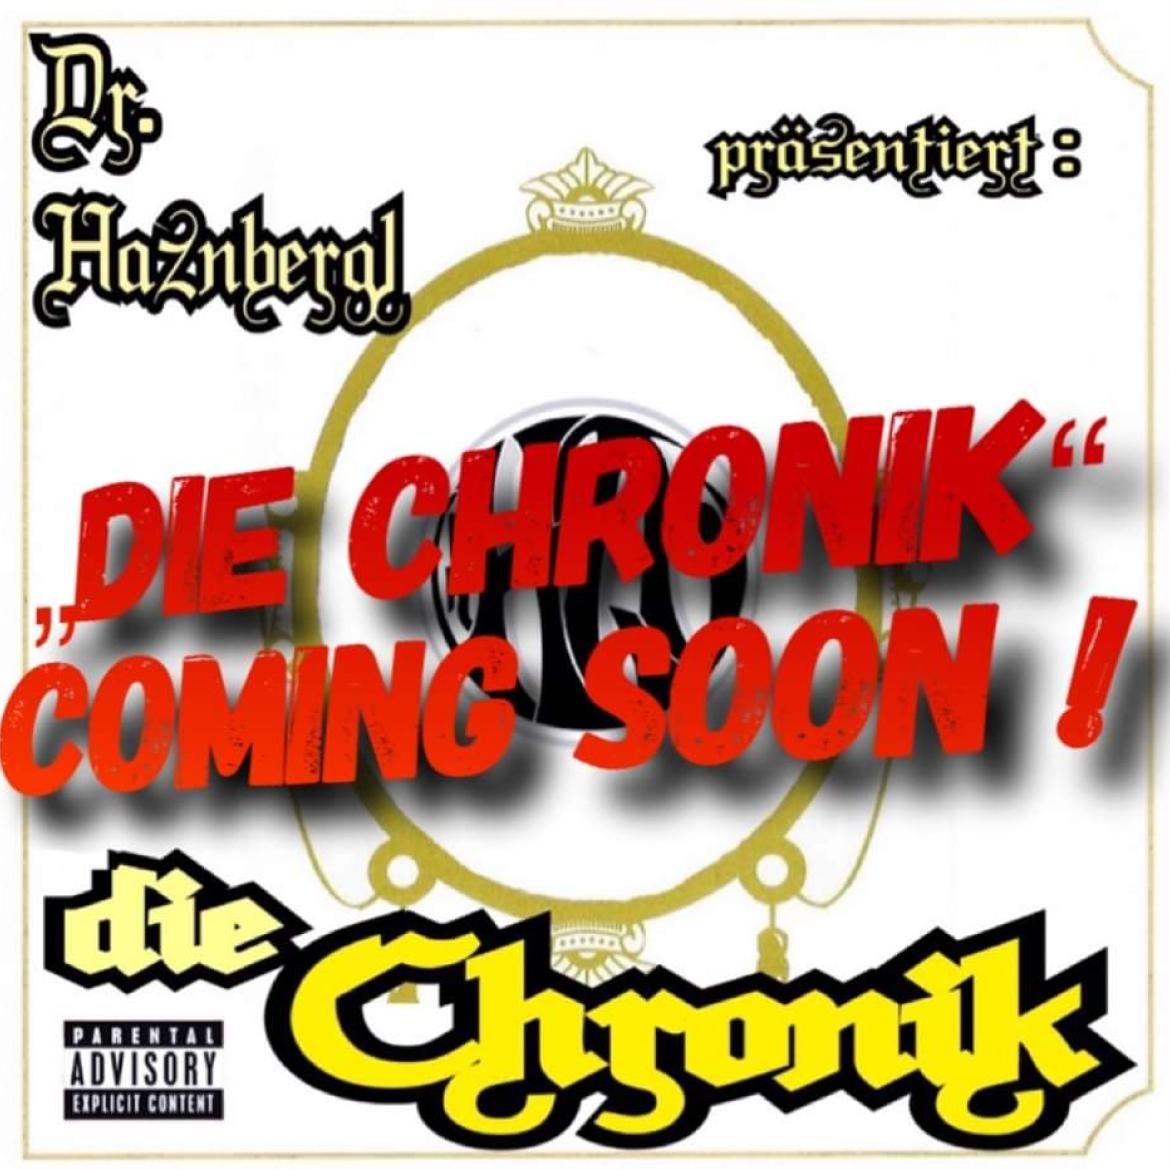 Doktor Haznbergl präsentiert „die Chronik“ (Album)